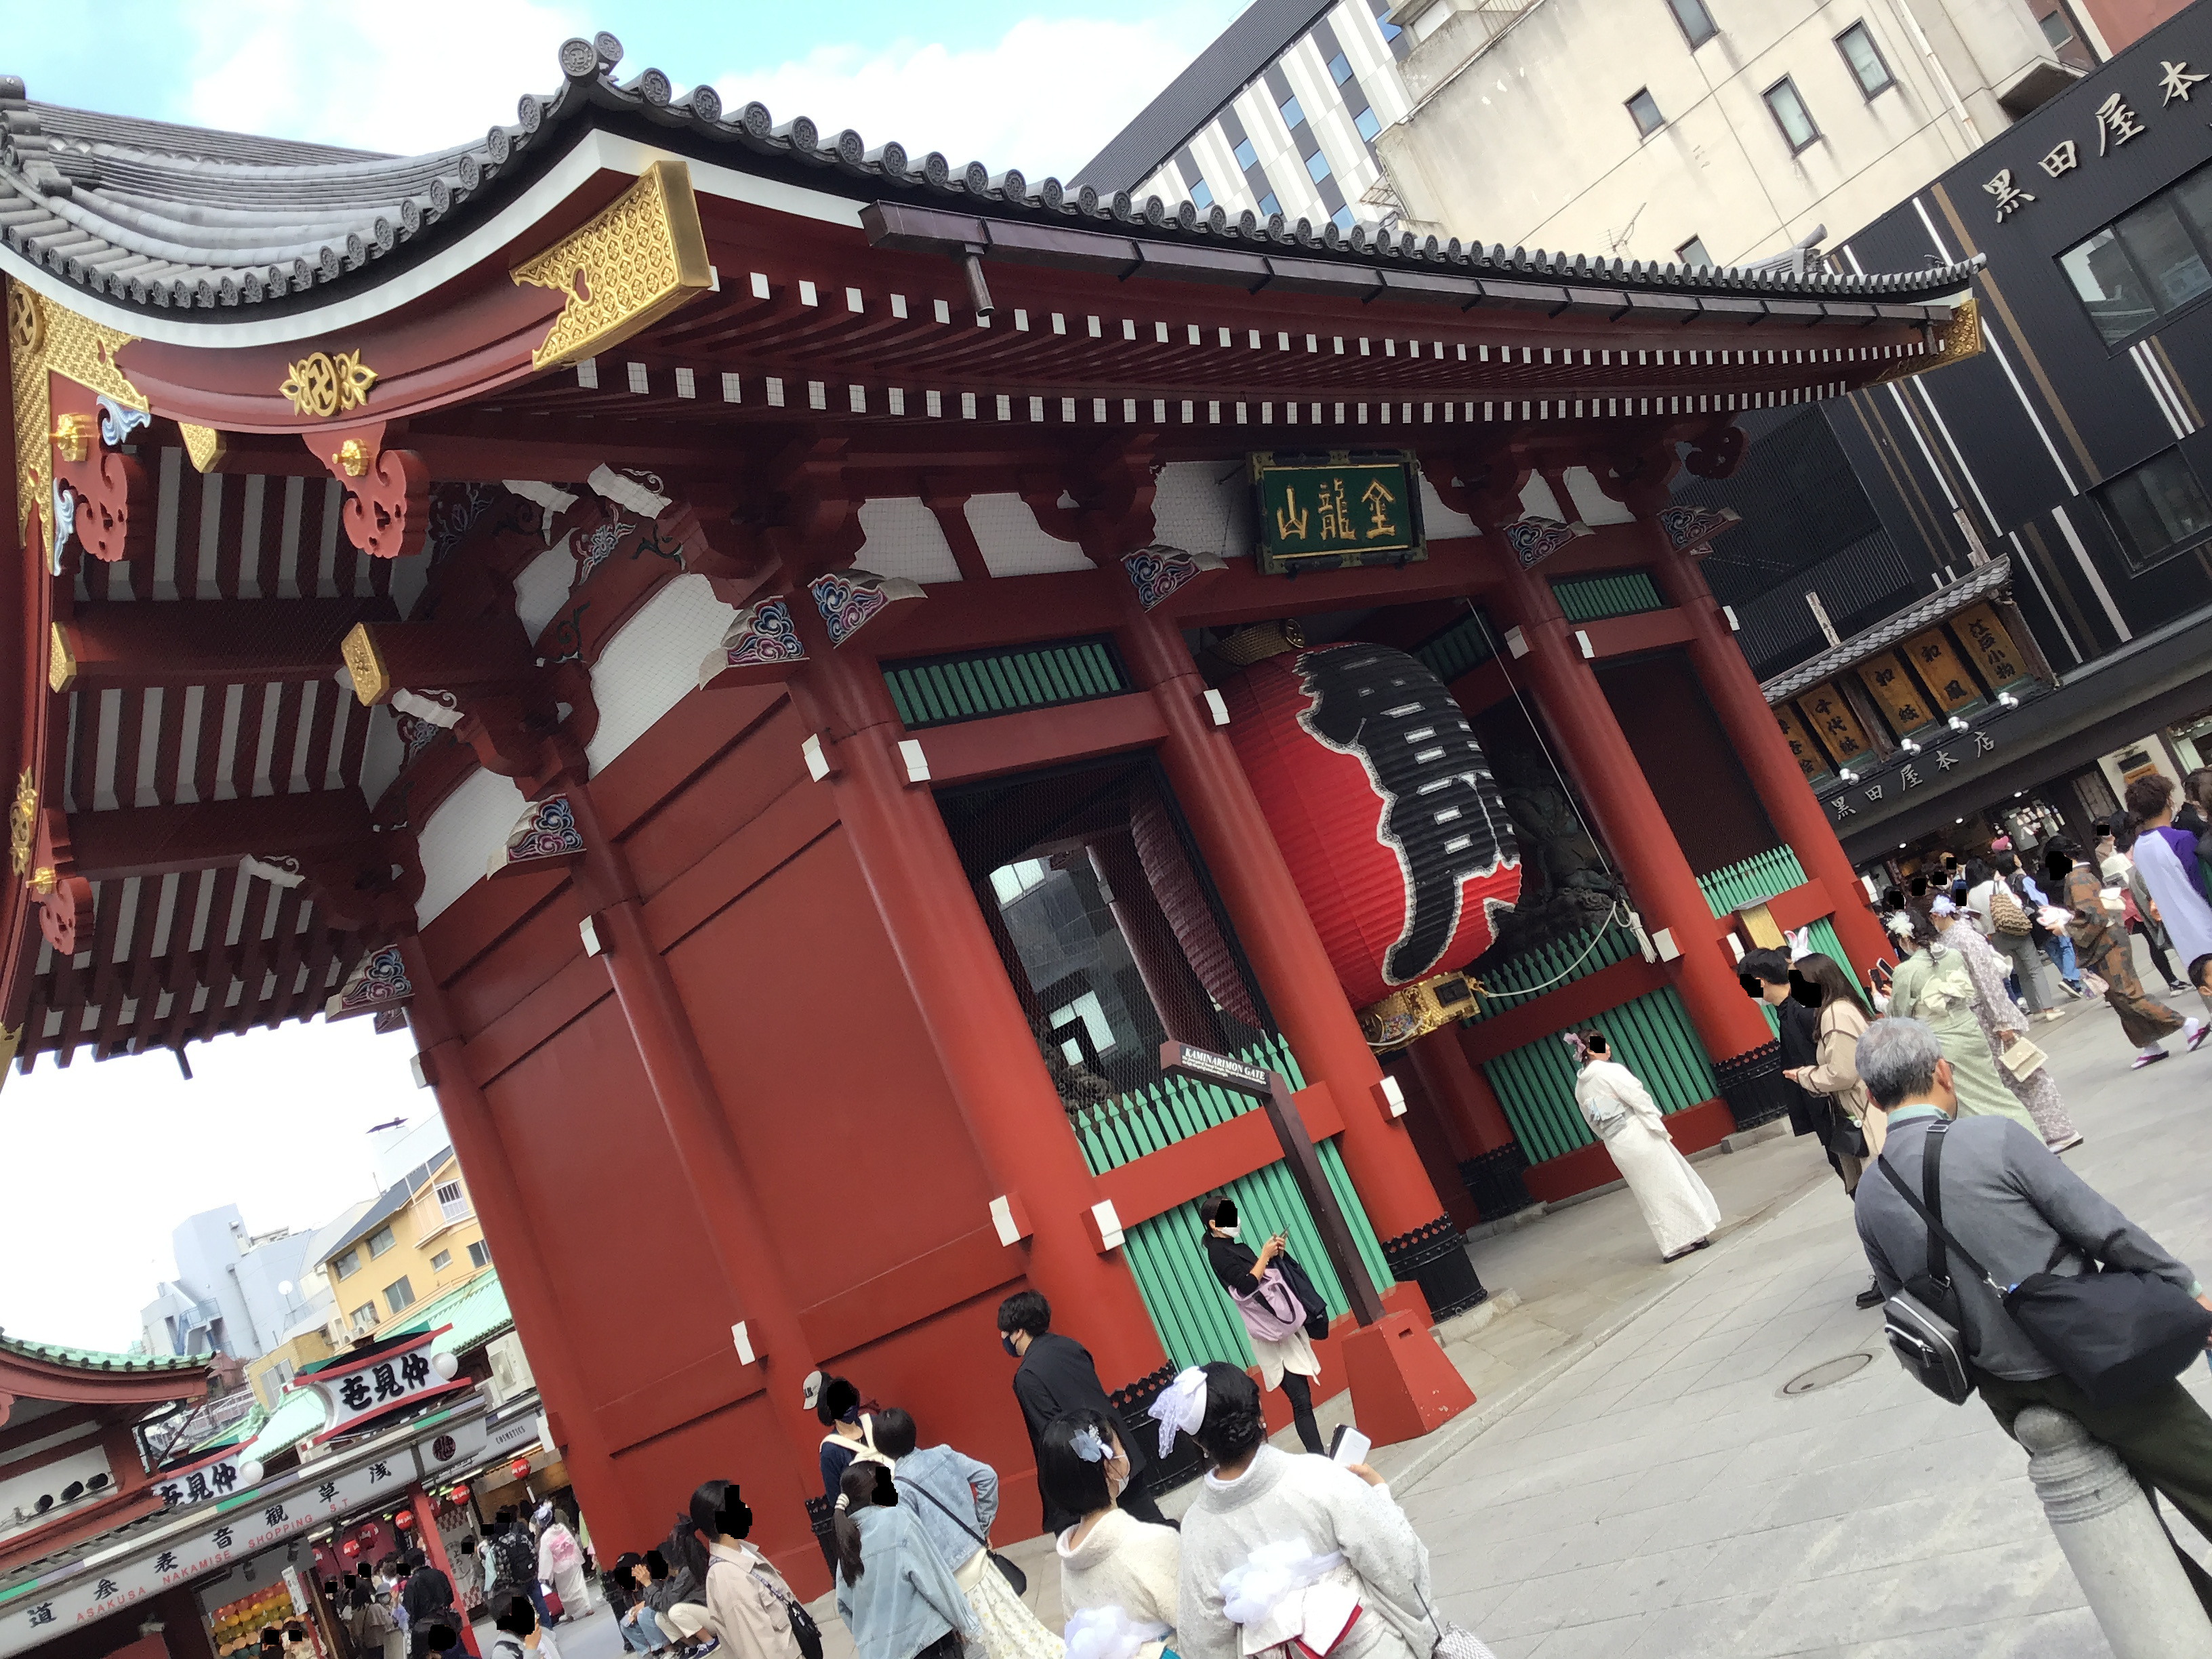 The Torii Gate at the entrance to Asakusa Shrine